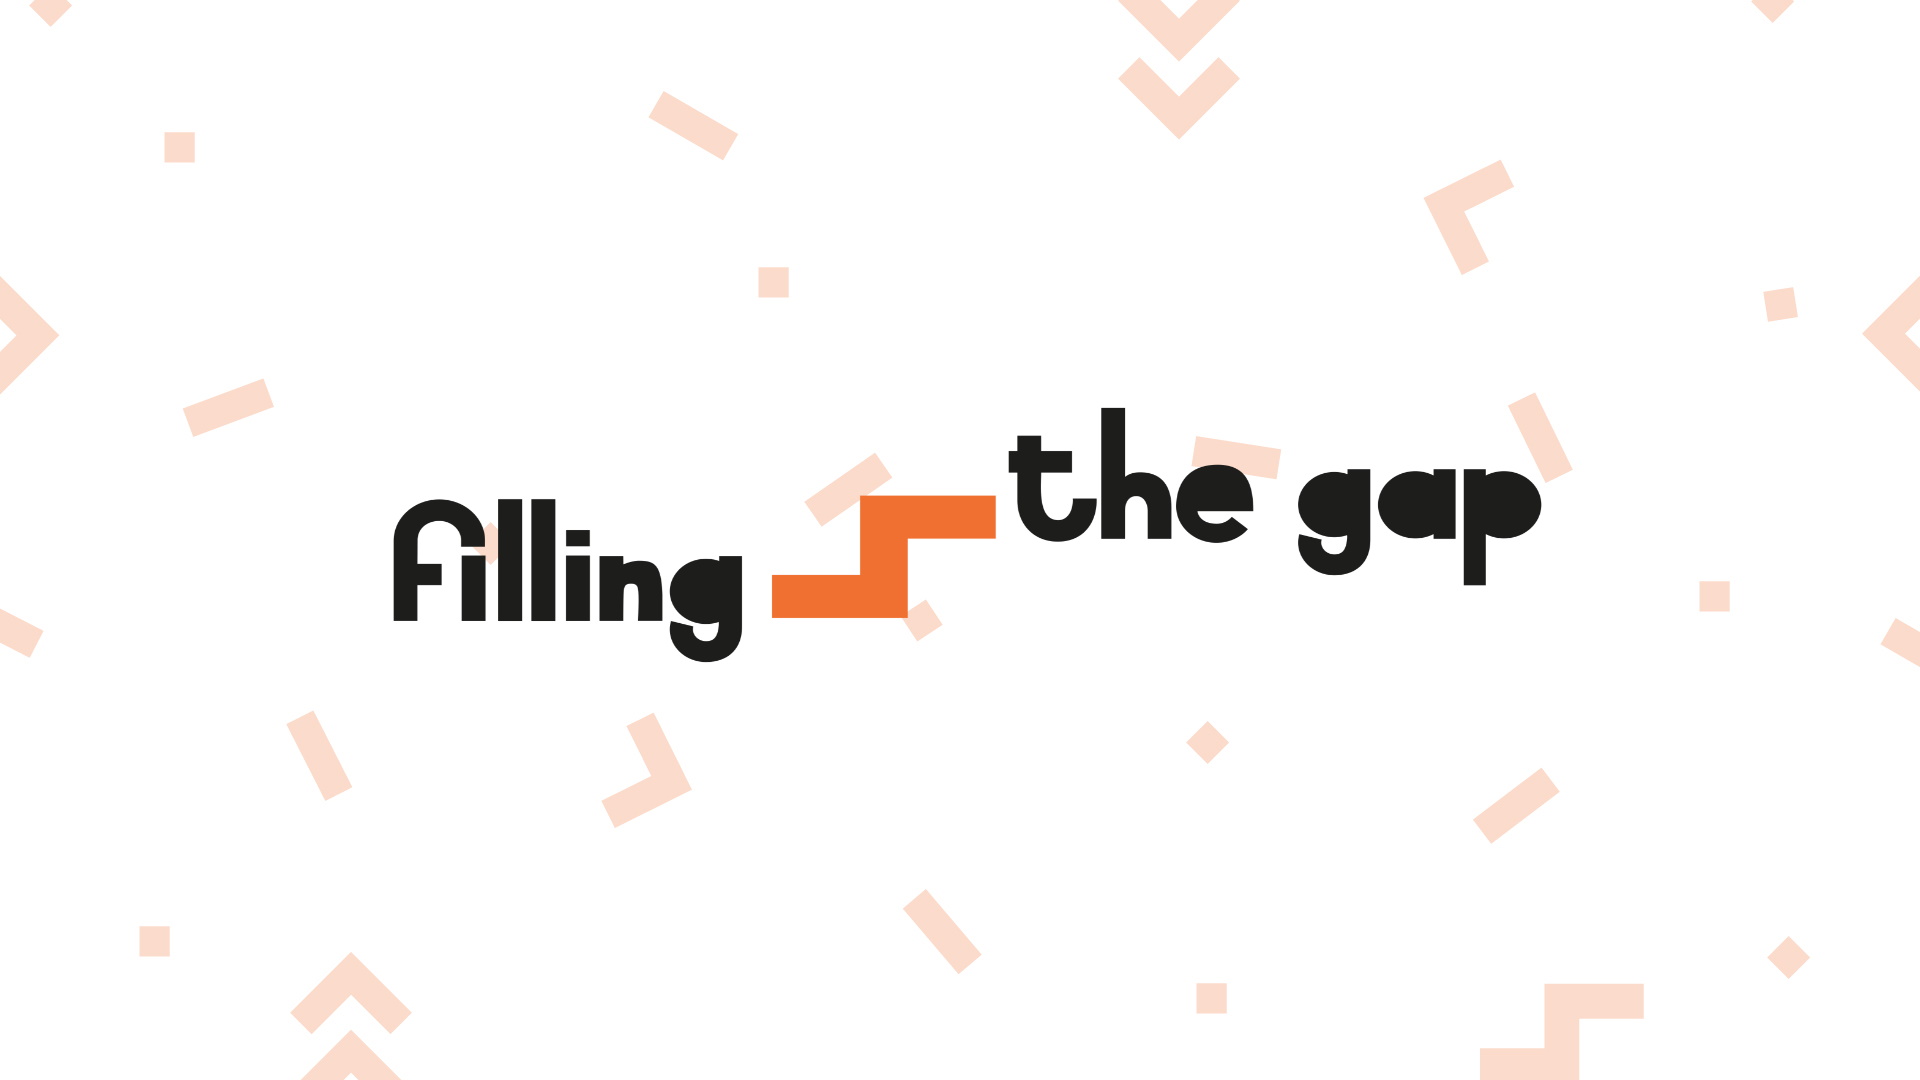 pattern-filling-the-gap-1920-2